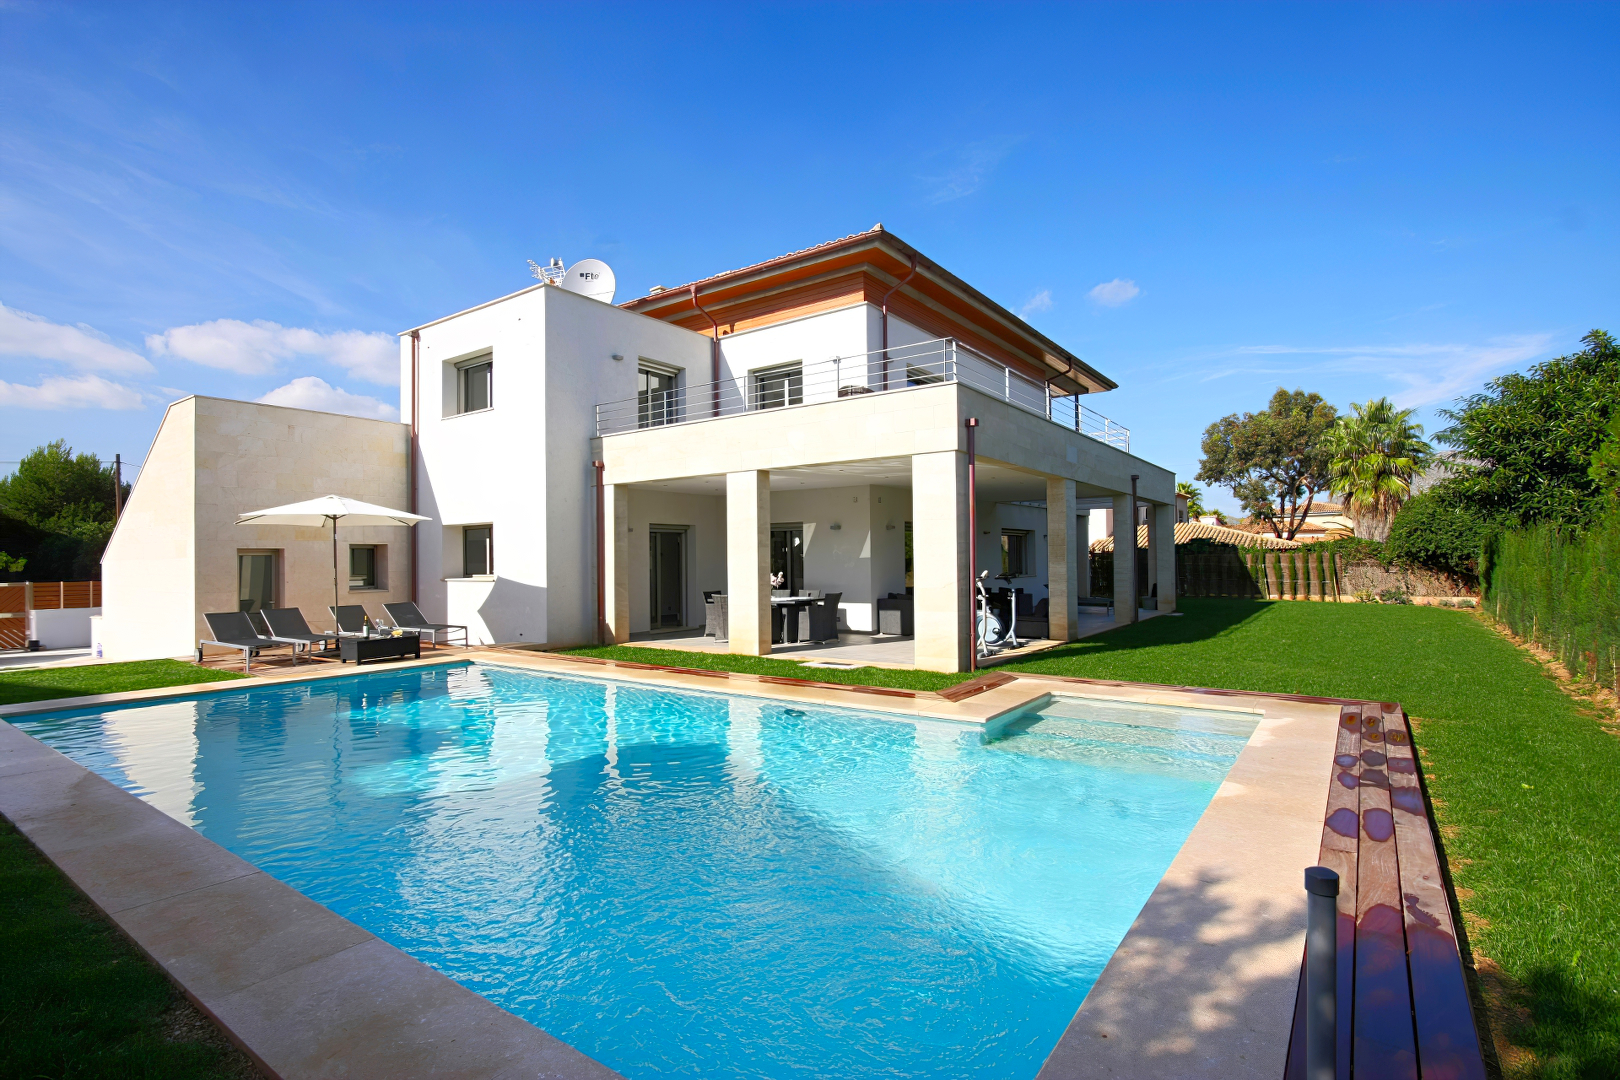 Casa Linda is a luxury villa for rent in Puerto Pollensa